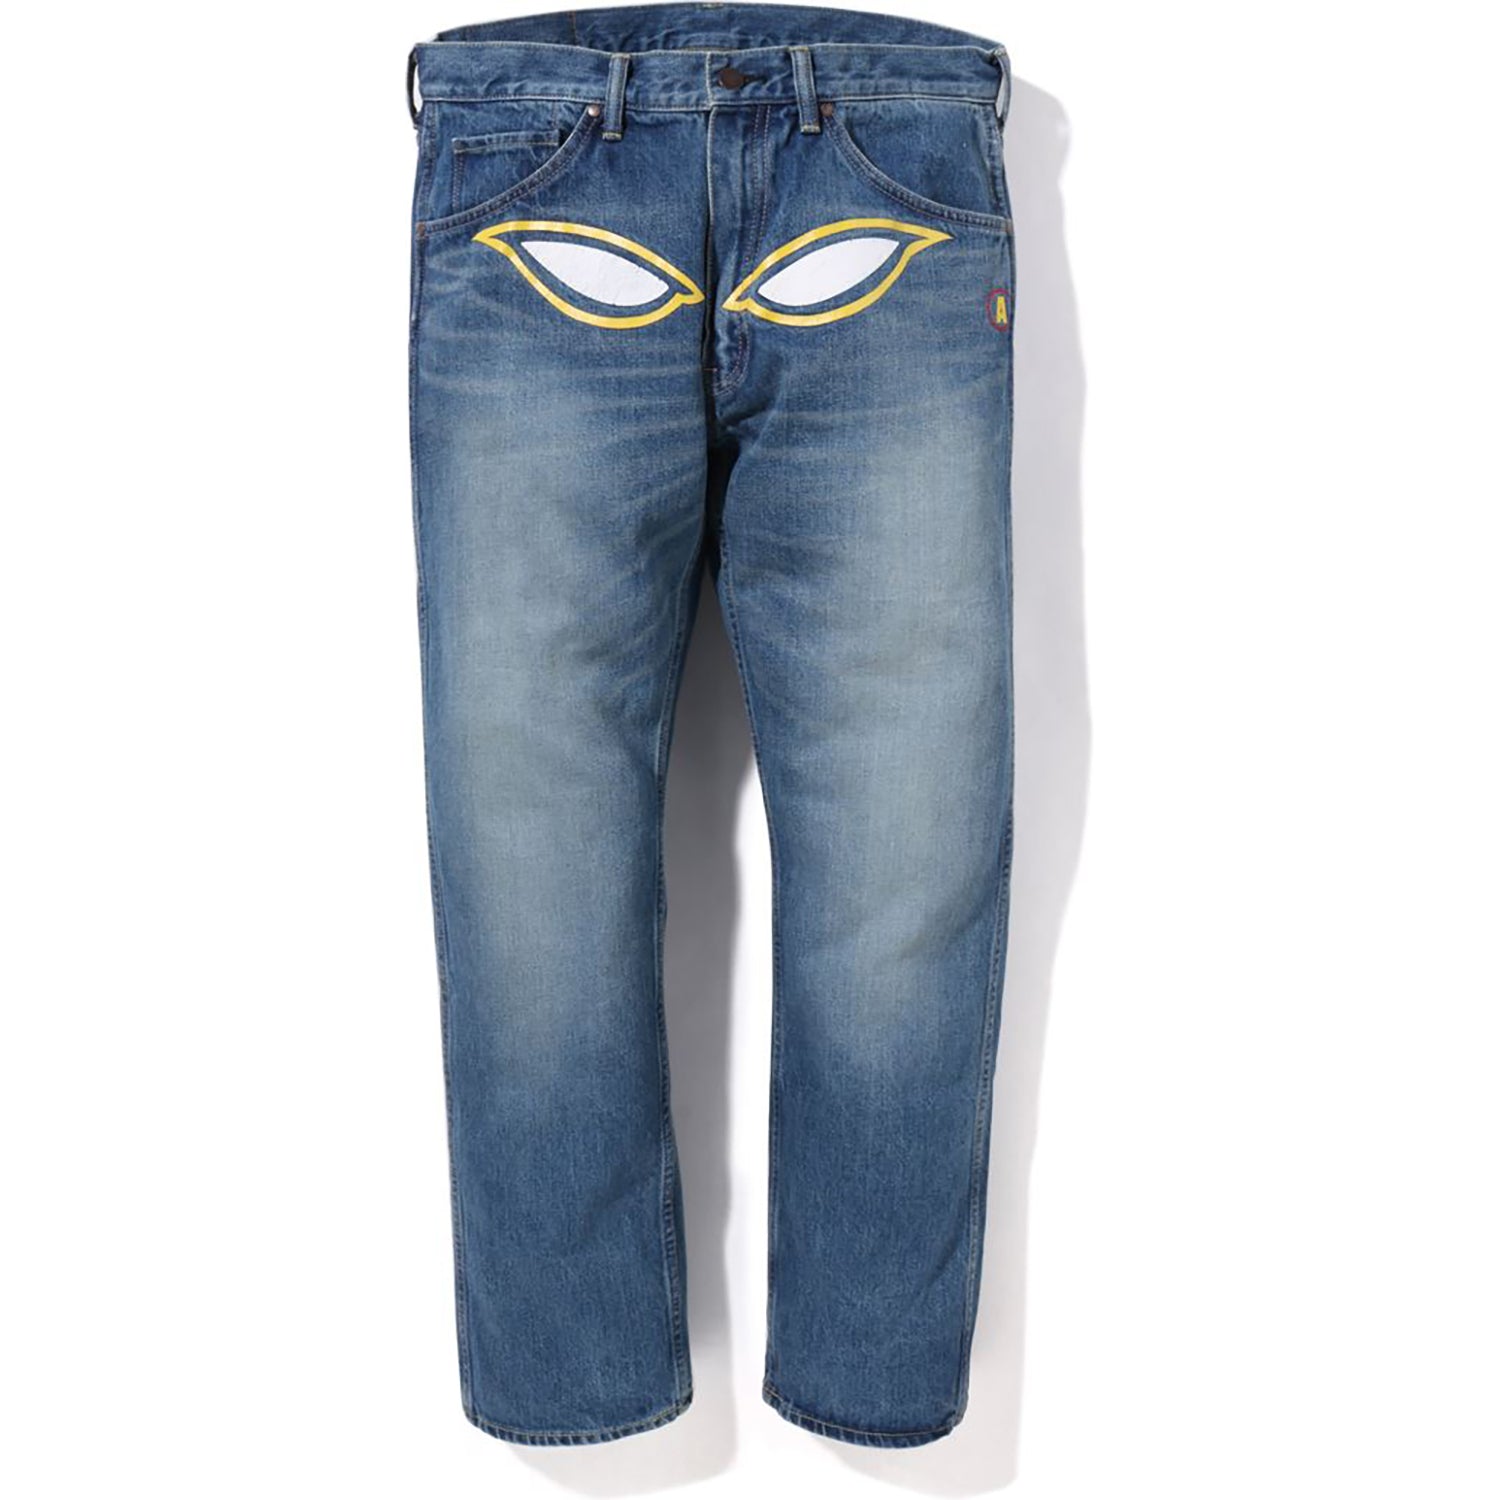 Buy Blue Jeans for Men, Dark Blue Jeans: SELECTED HOMME